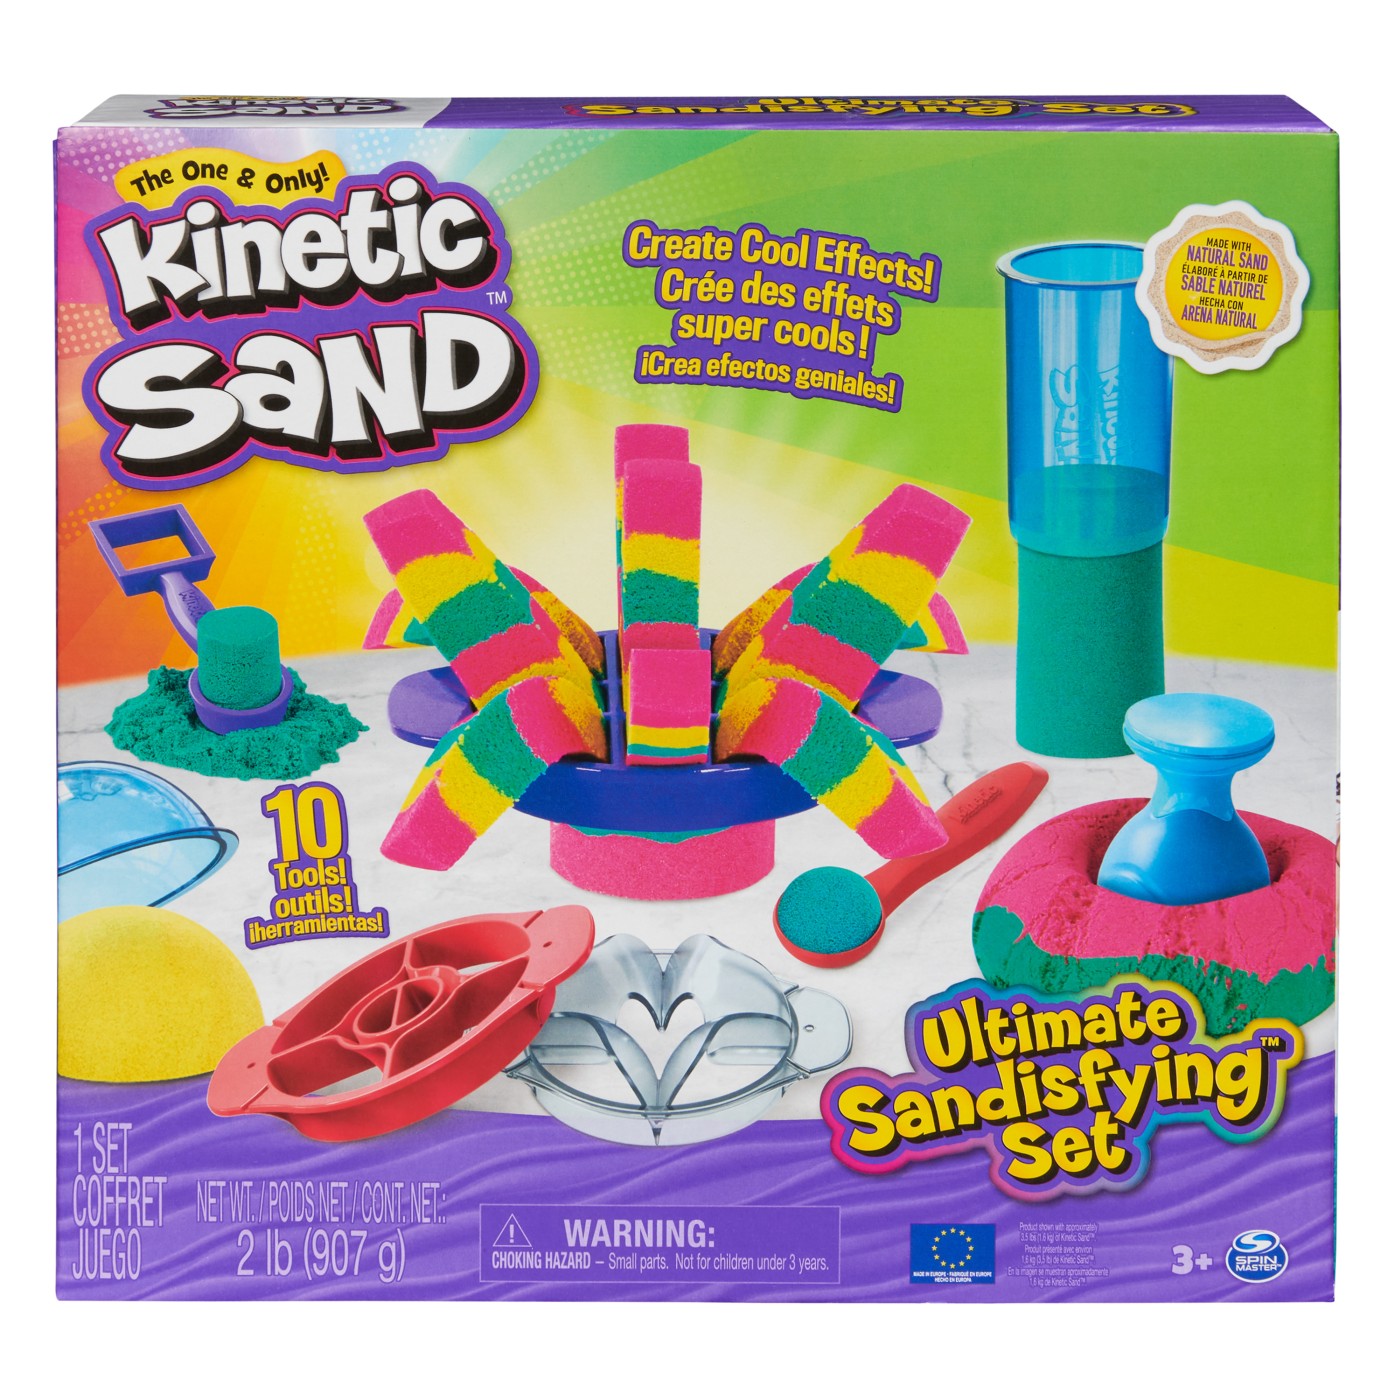 Nisip Kinetic Set Ultimate Sandisfying, Spin Master